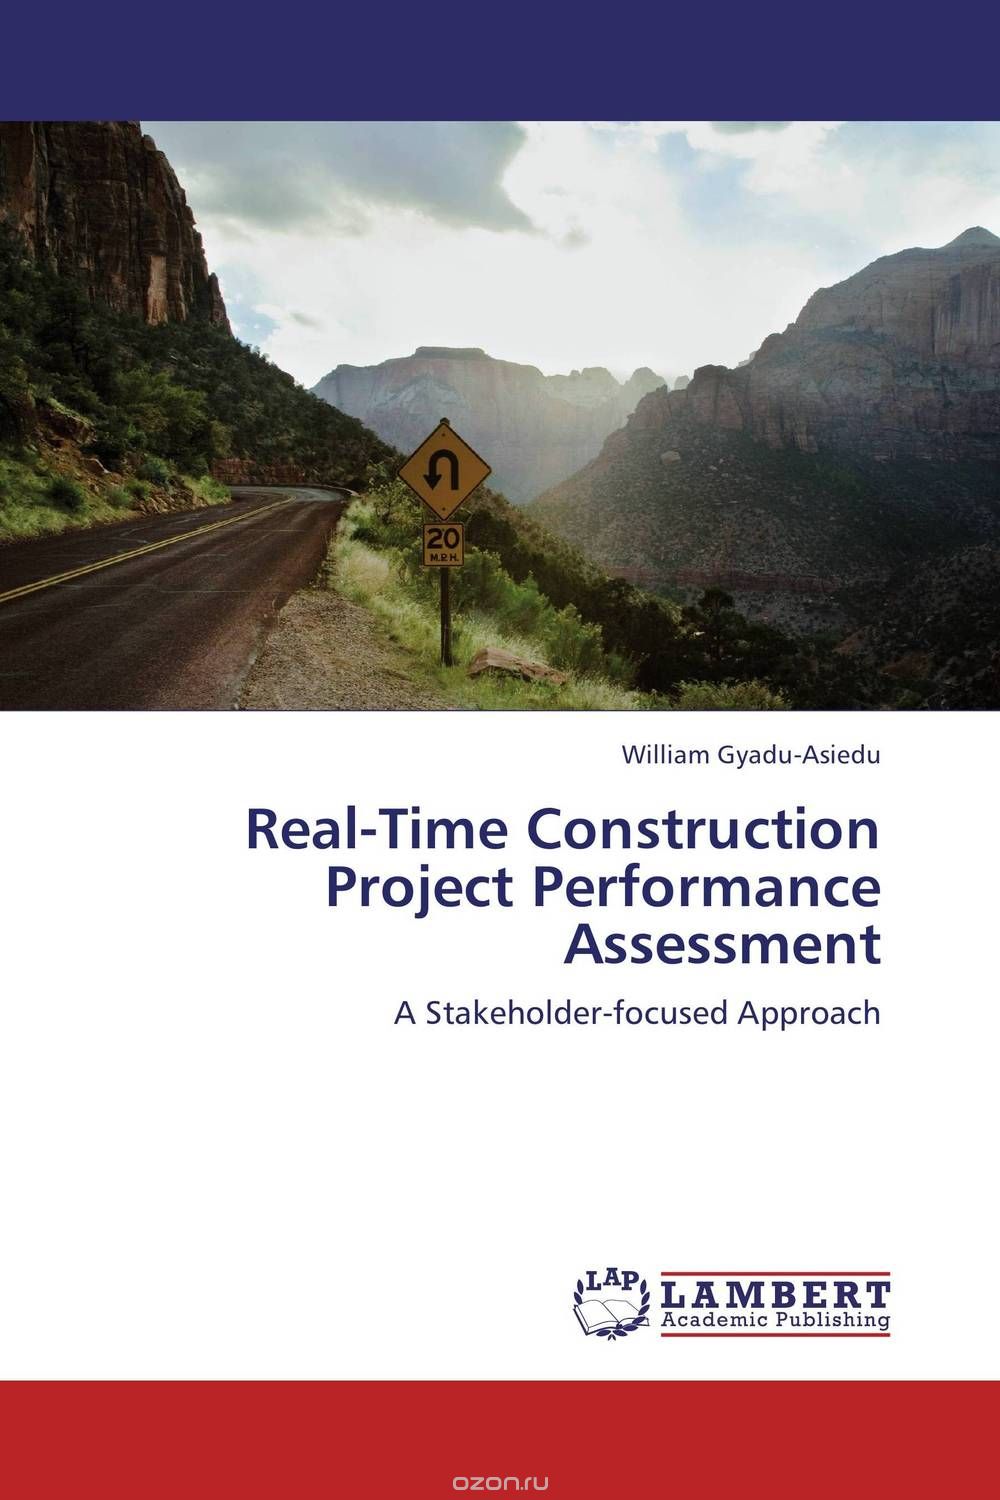 Скачать книгу "Real-Time Construction Project Performance Assessment"